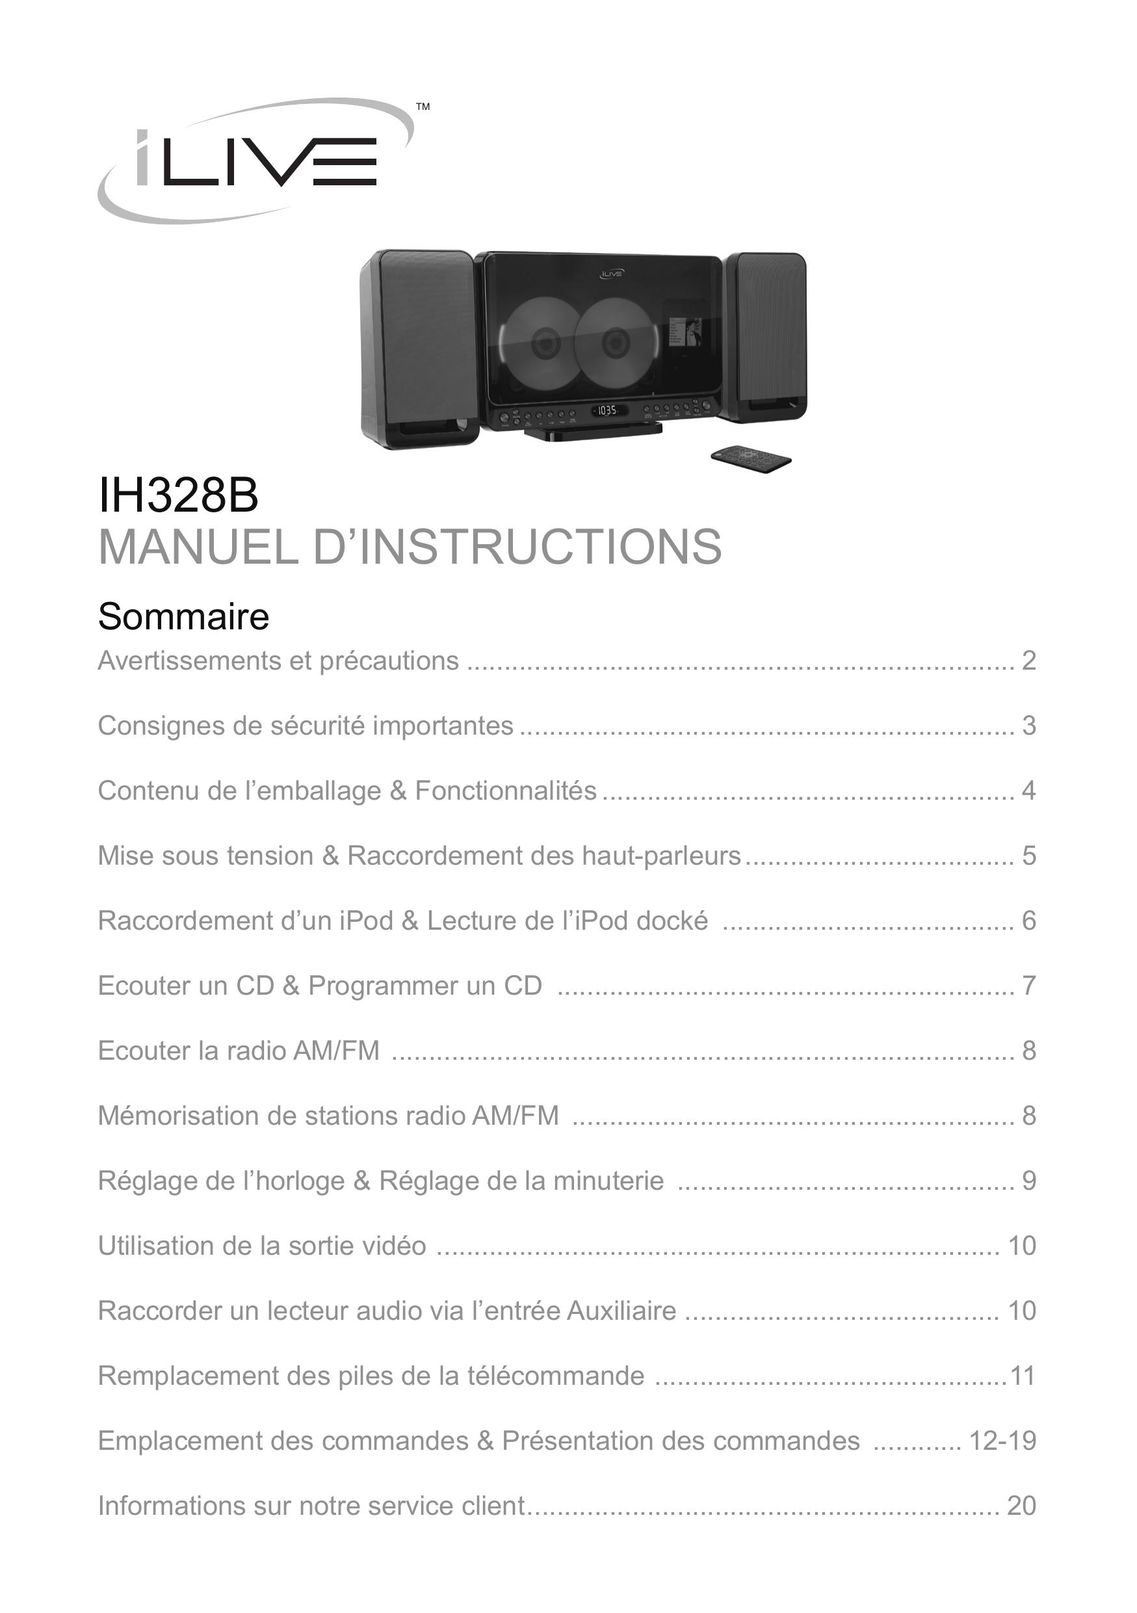 iLive IH328B MP3 Docking Station User Manual